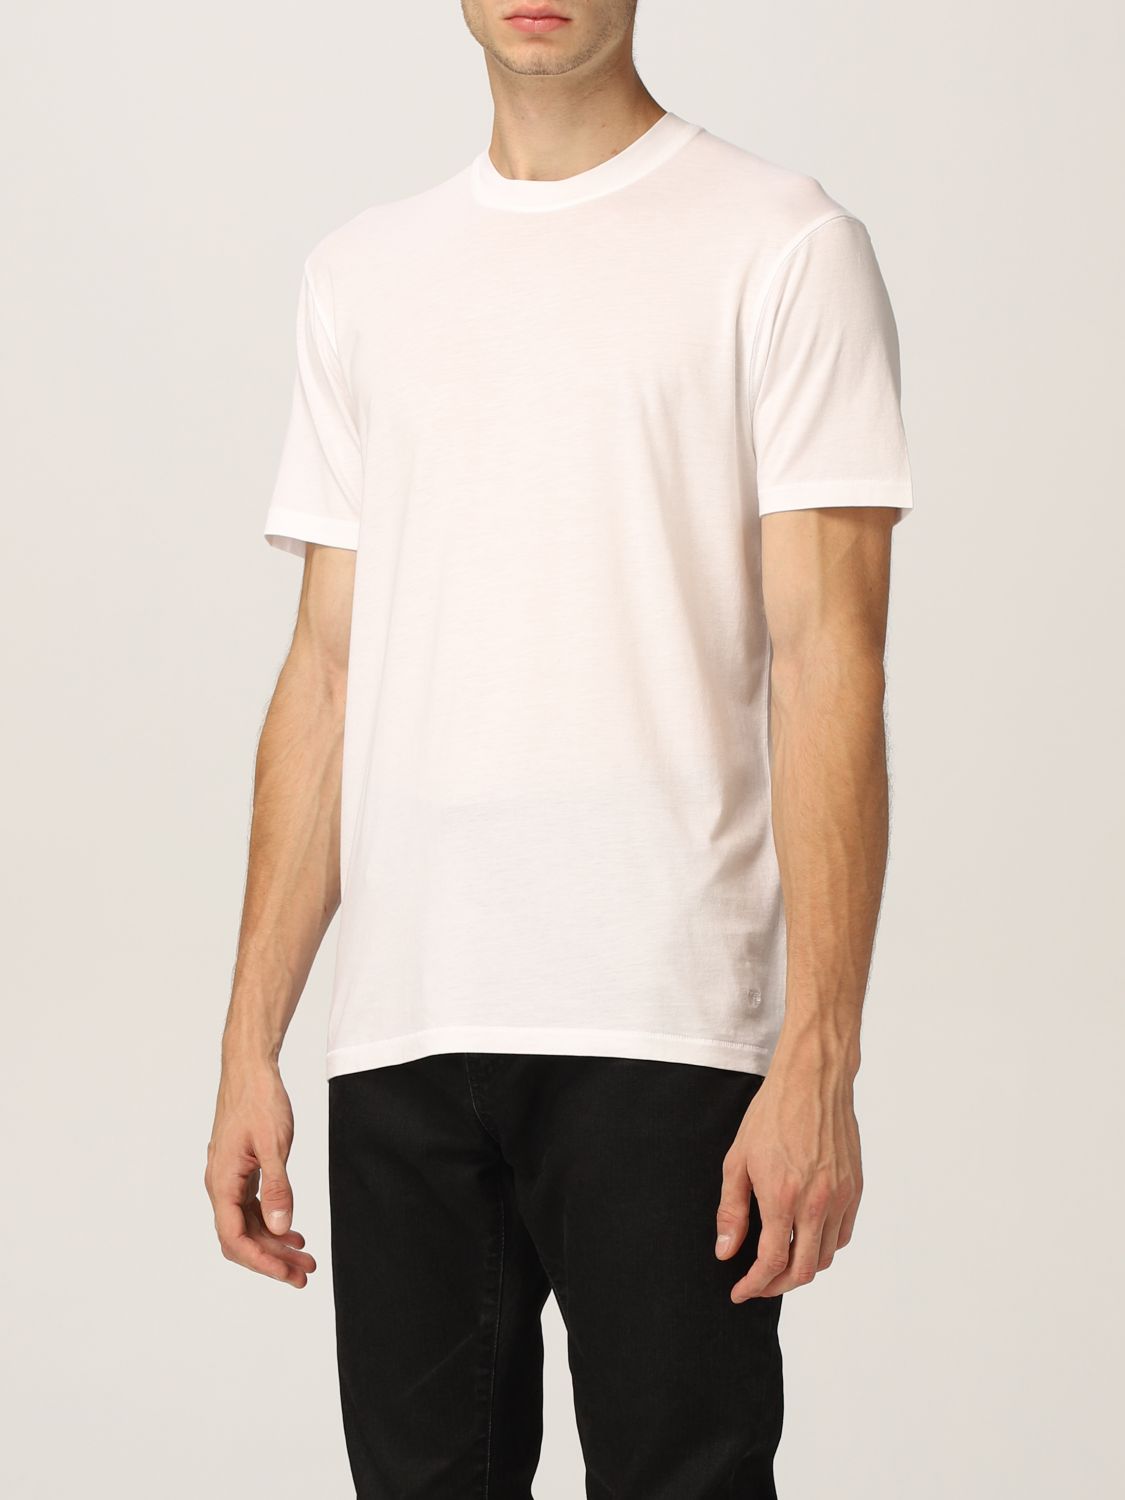 Camiseta Tom Ford: Camiseta hombre Tom Ford blanco 3